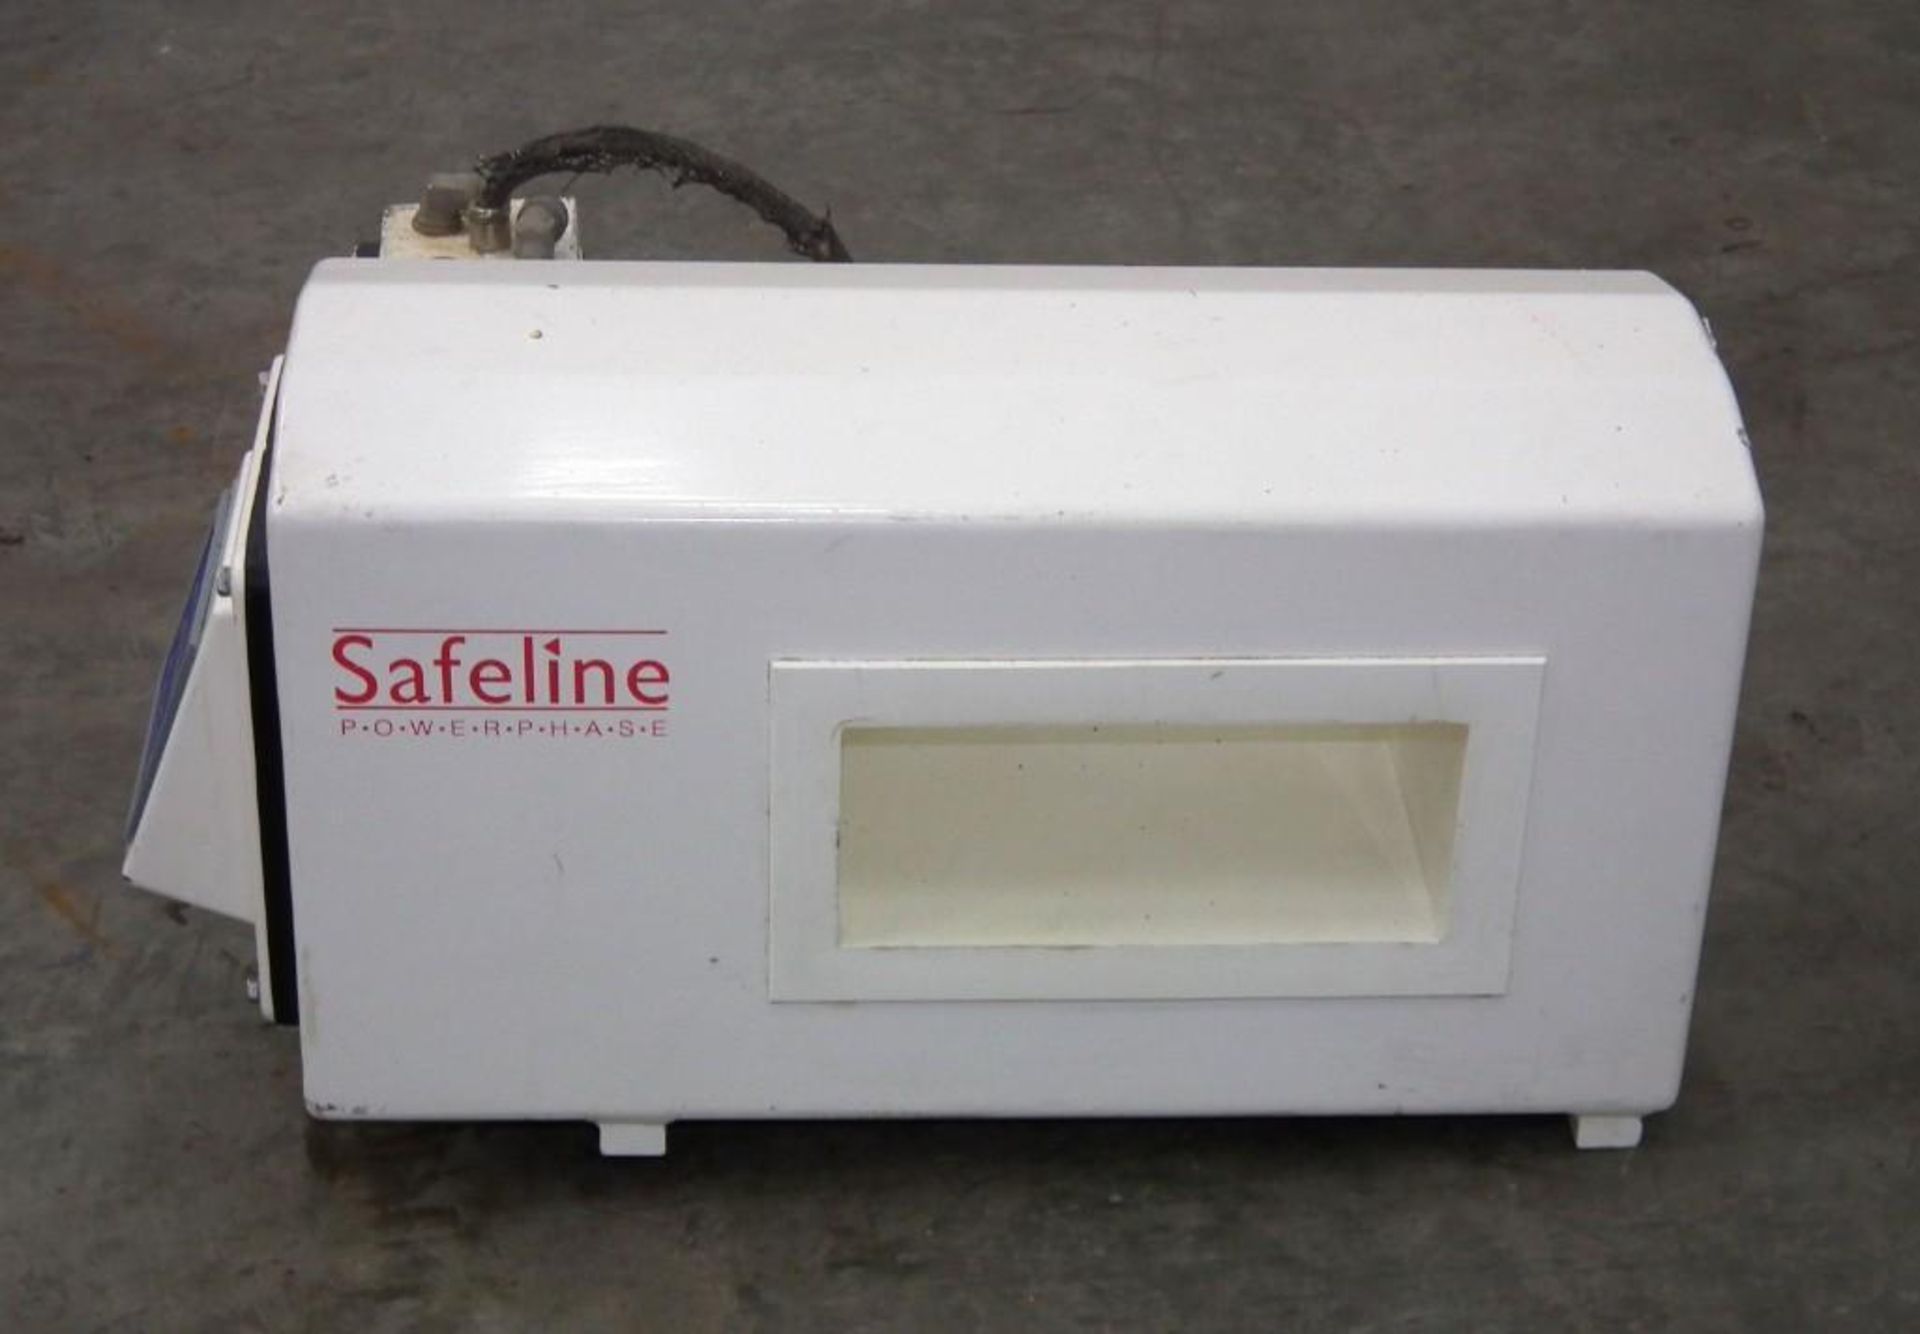 Safeline Metal Detector Powerphase 12" Wide x 5" H - Image 2 of 8